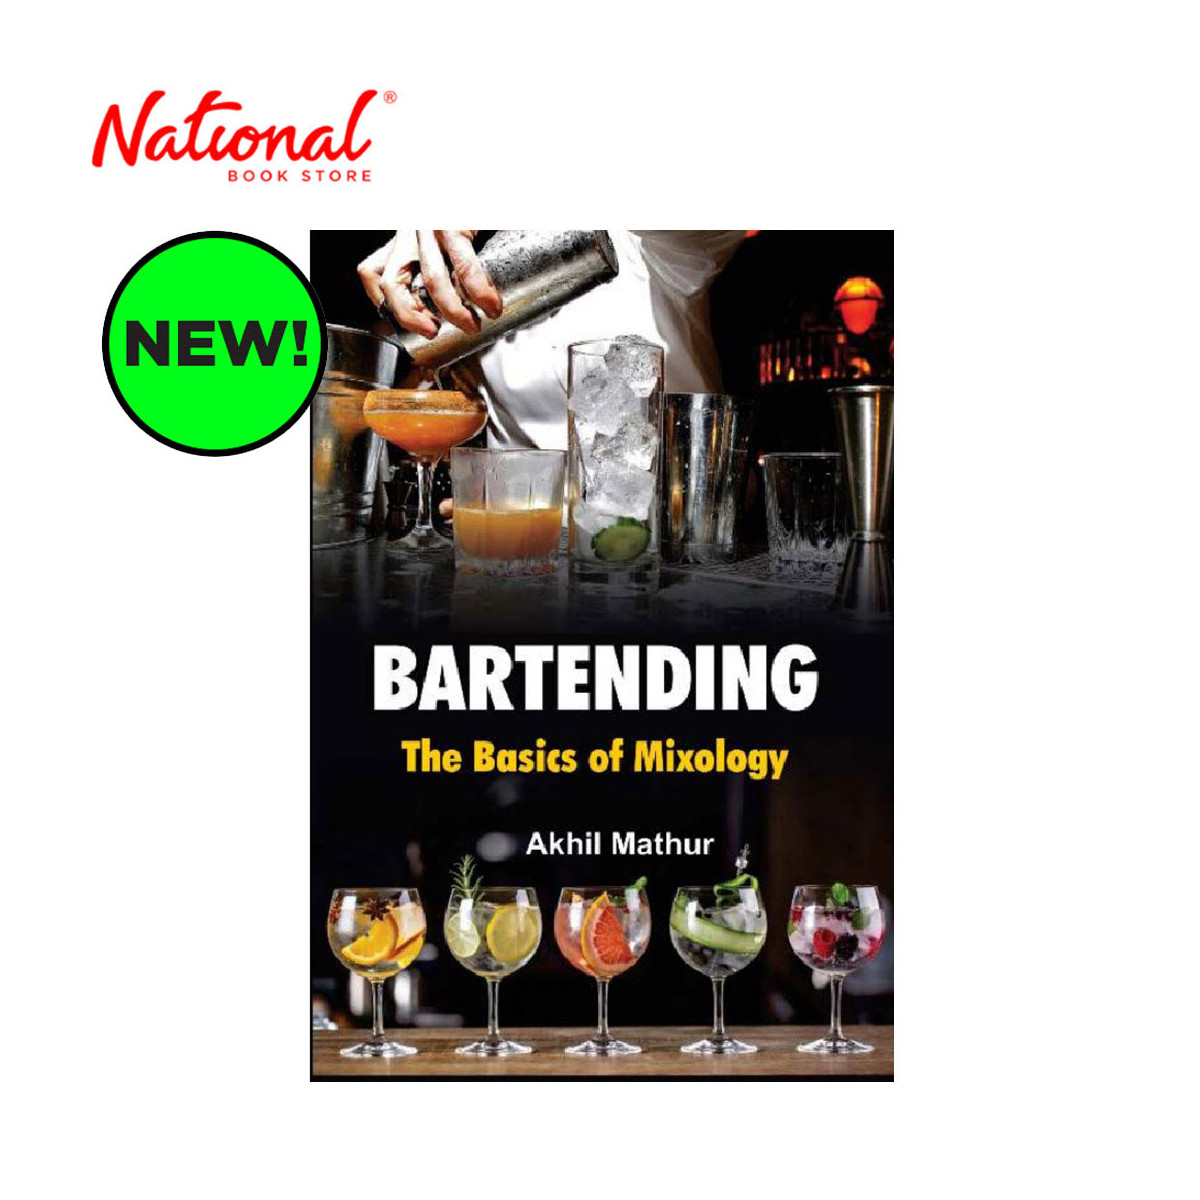 Bartending: The Basics of Mixology by Akhil Mathur - Trade Paperback - Culinary Books